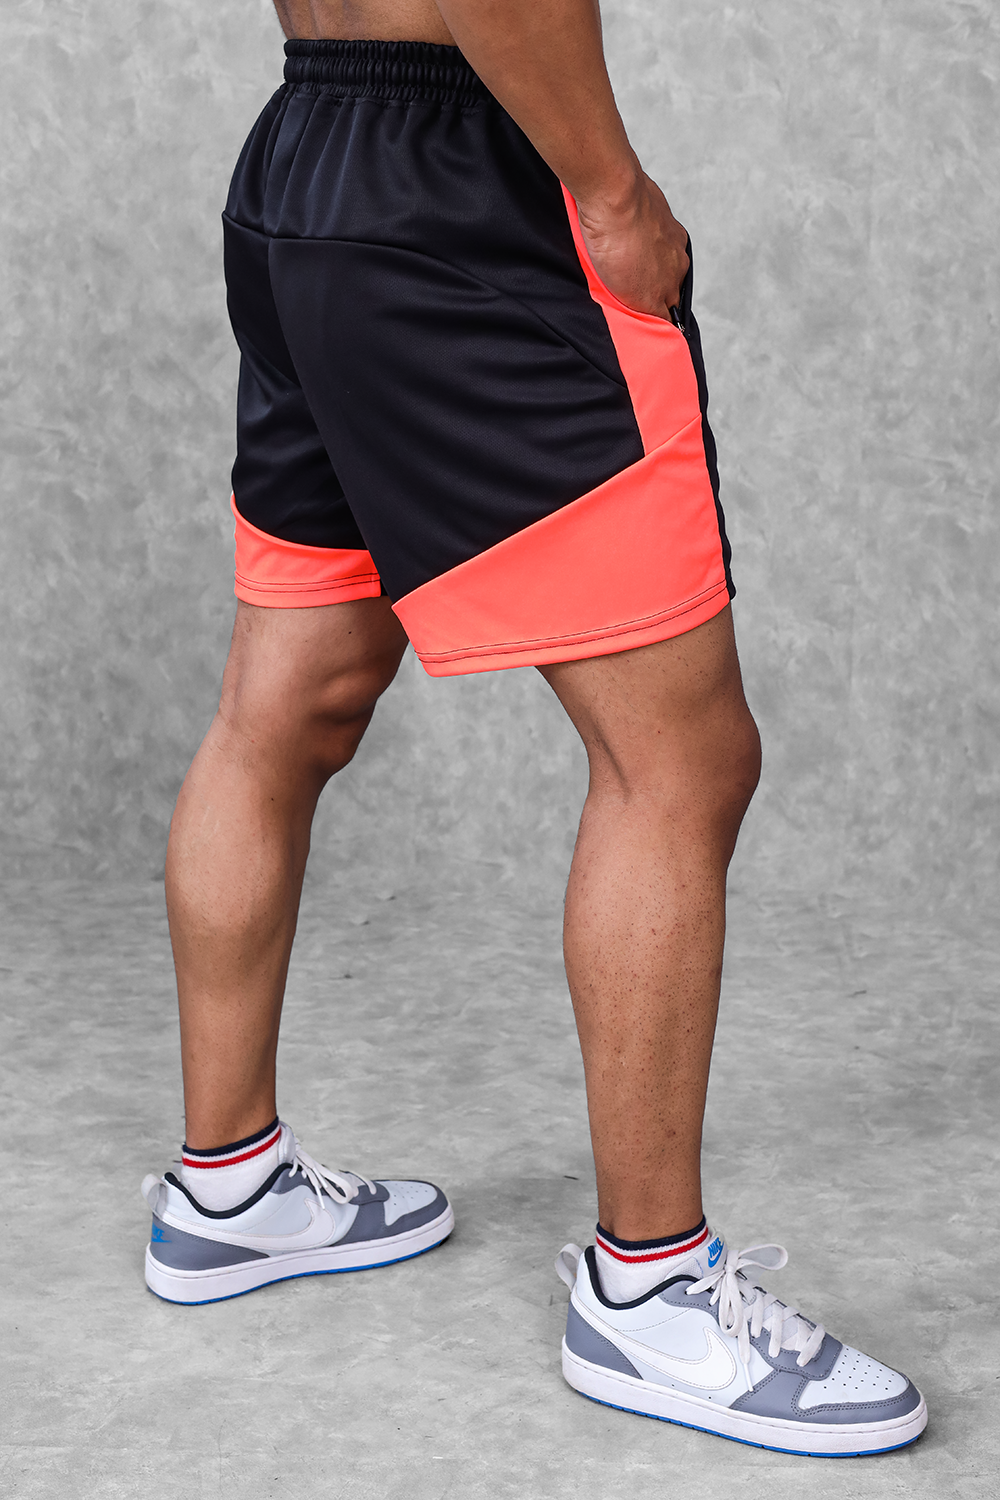 Block Training Shorts- Neon Orange